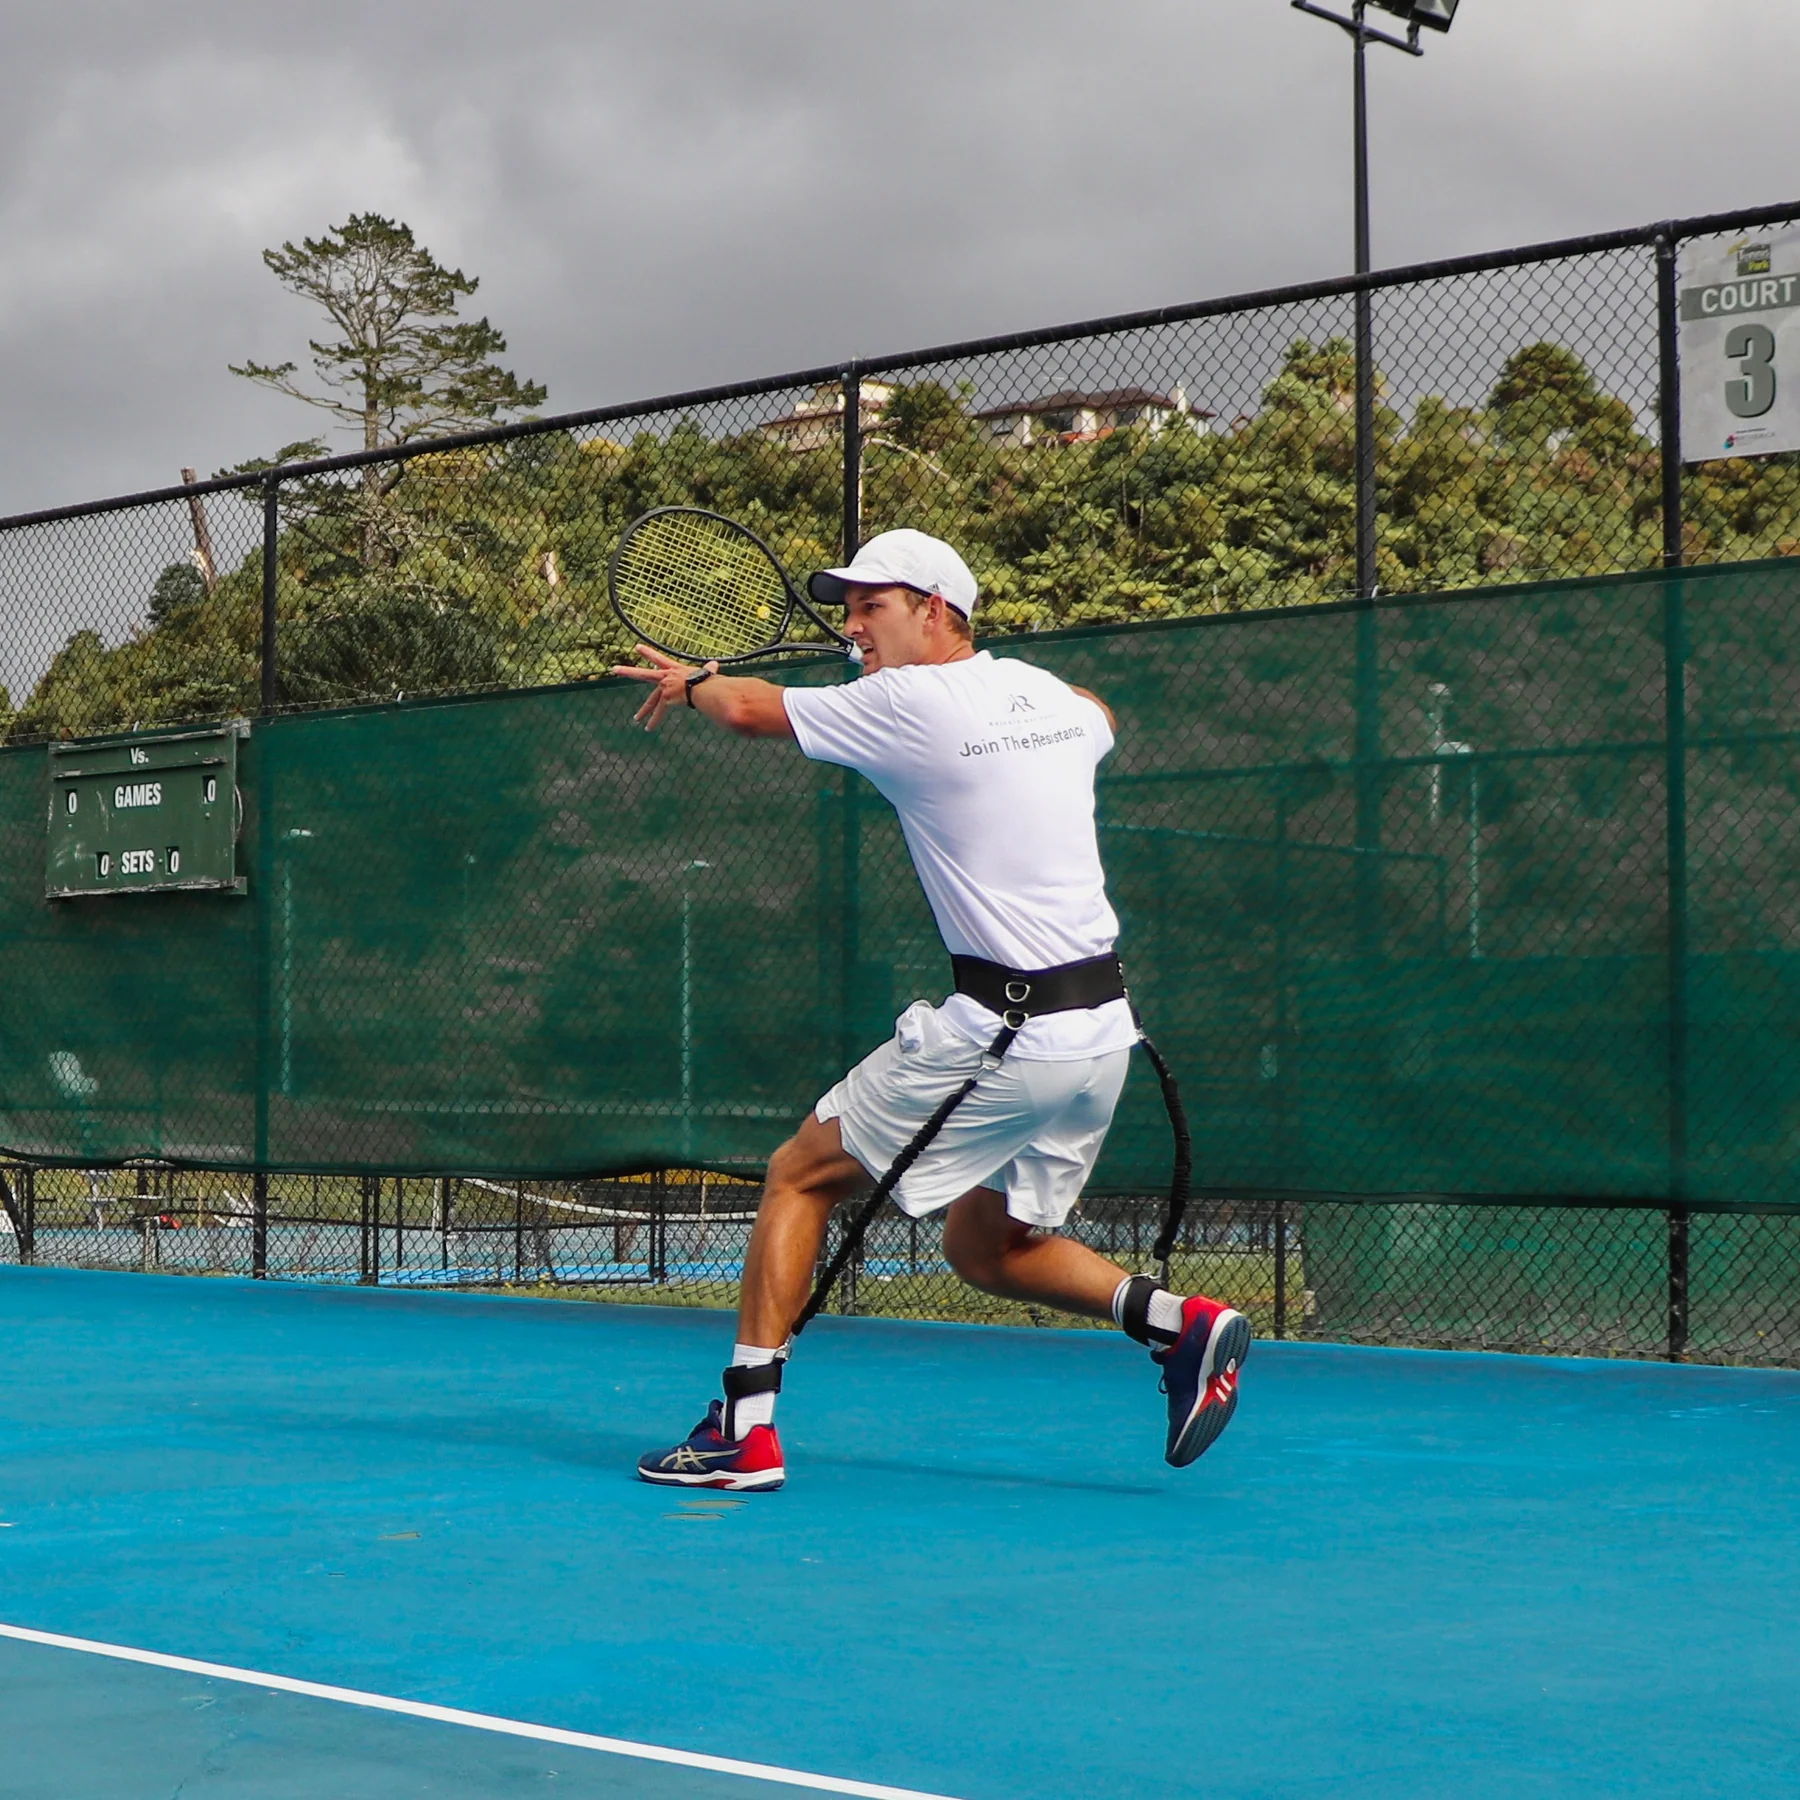 gravity belt allenamento tennis